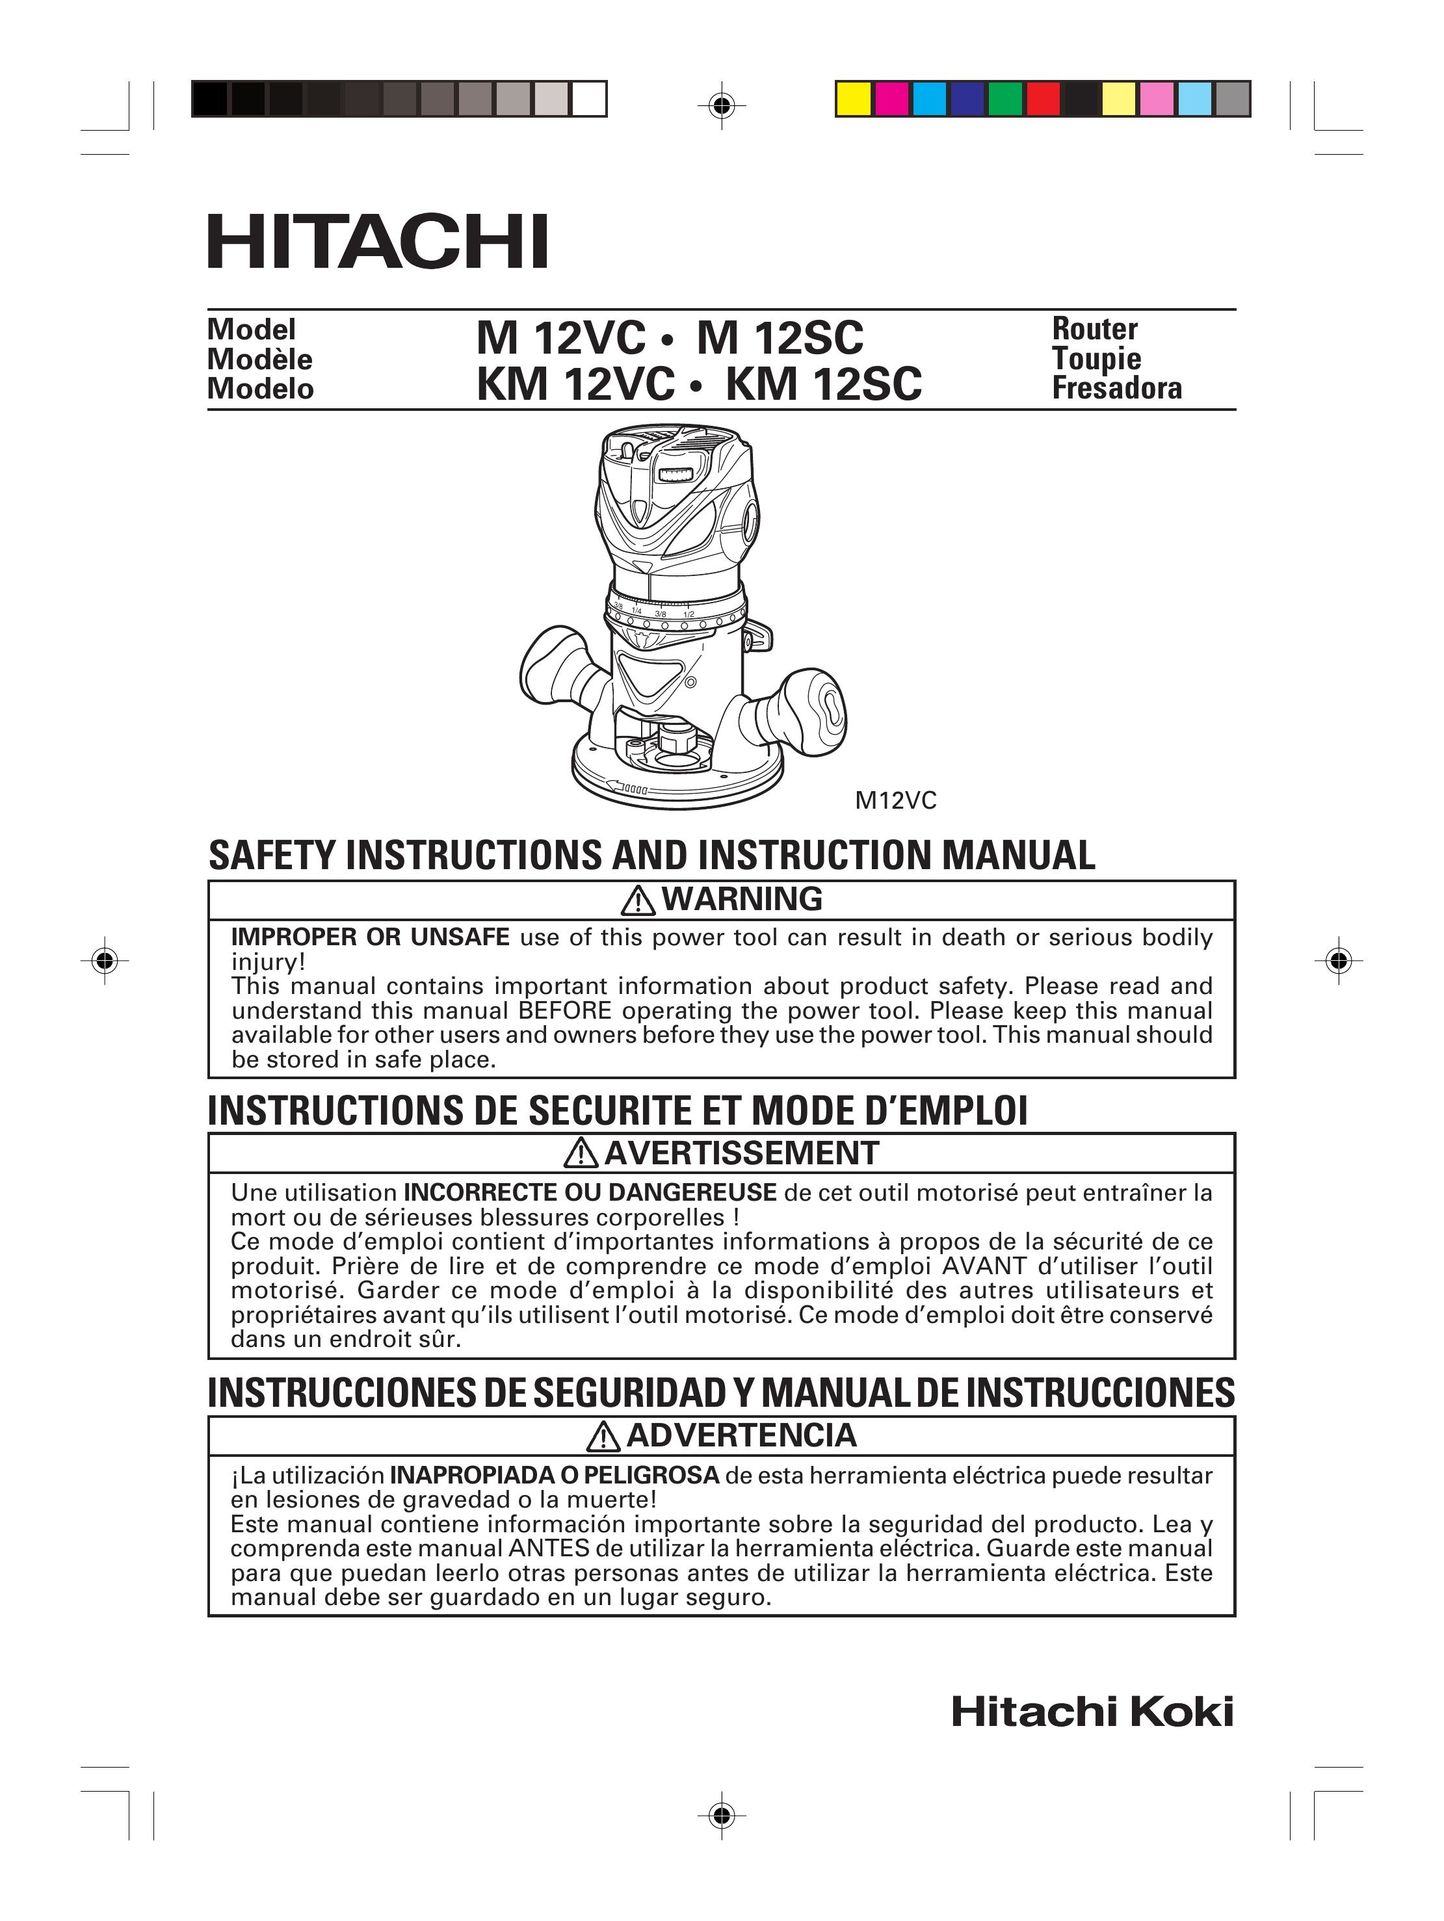 Hitachi KM 12VC Router User Manual